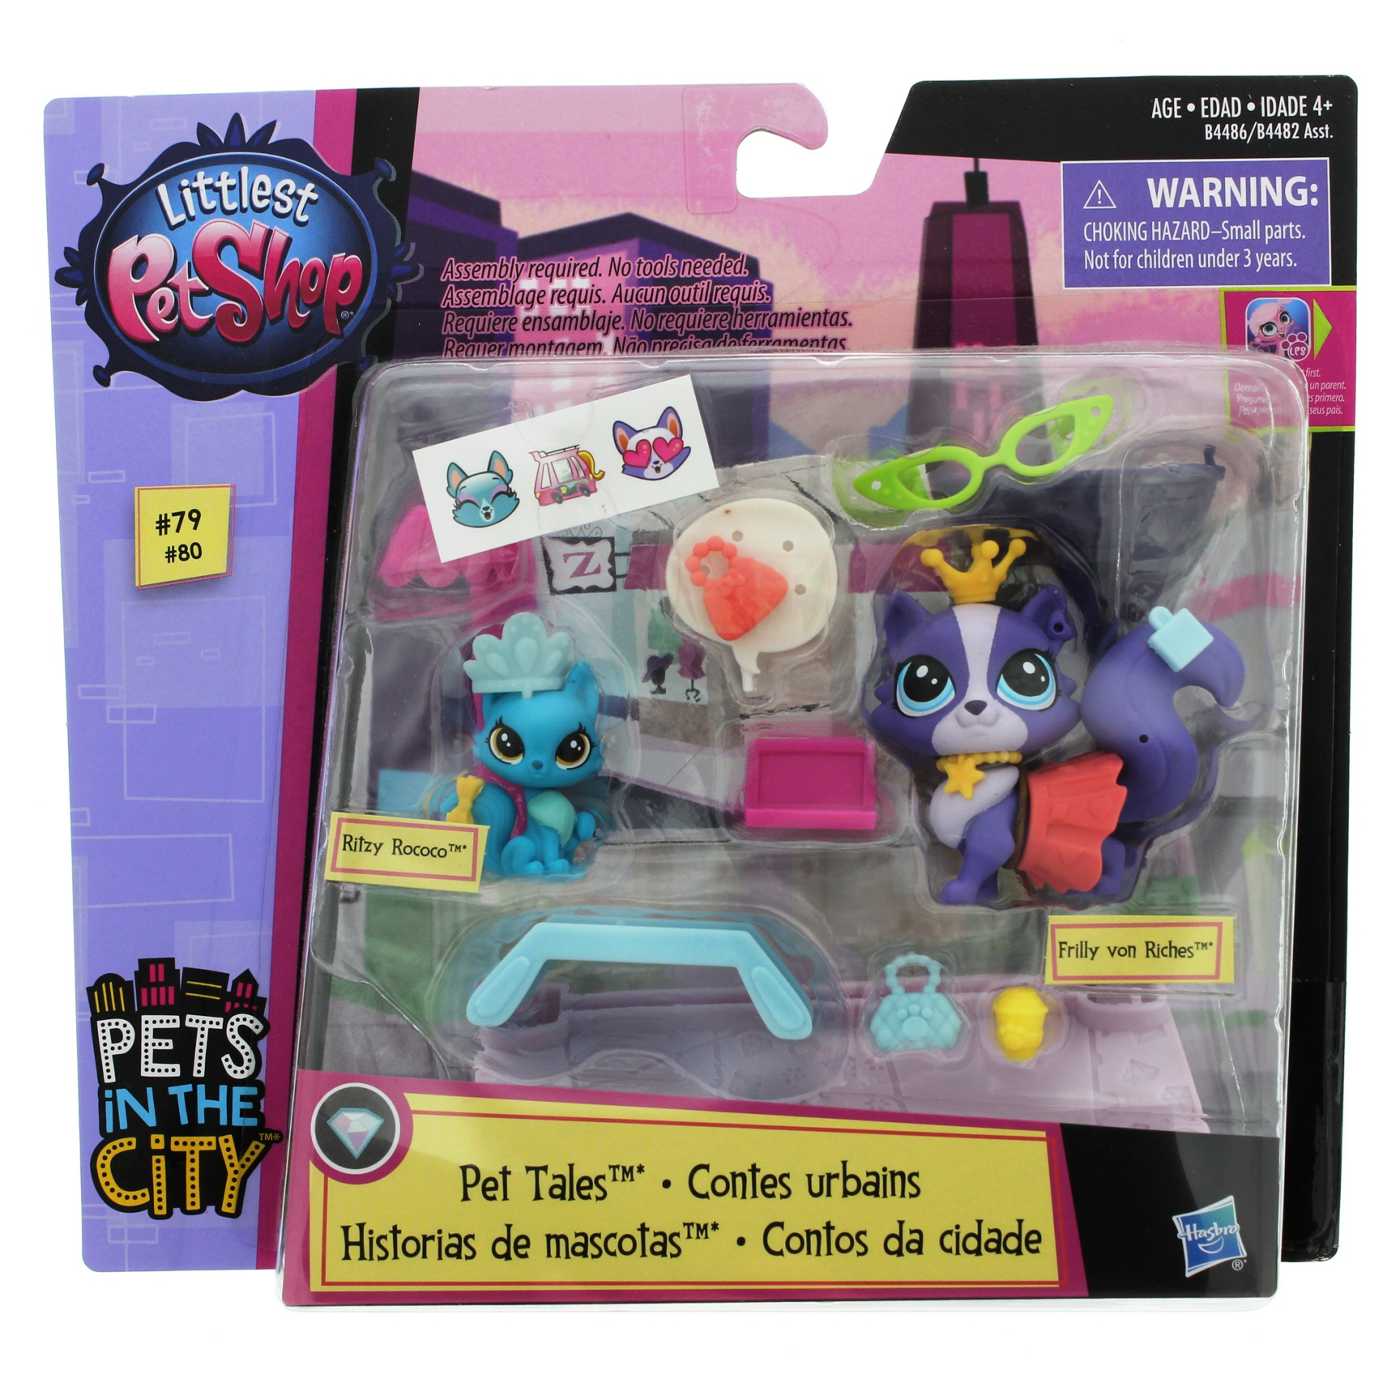 Littlest Pet Shop Pet Tales Playset Assortment - Shop Playsets at